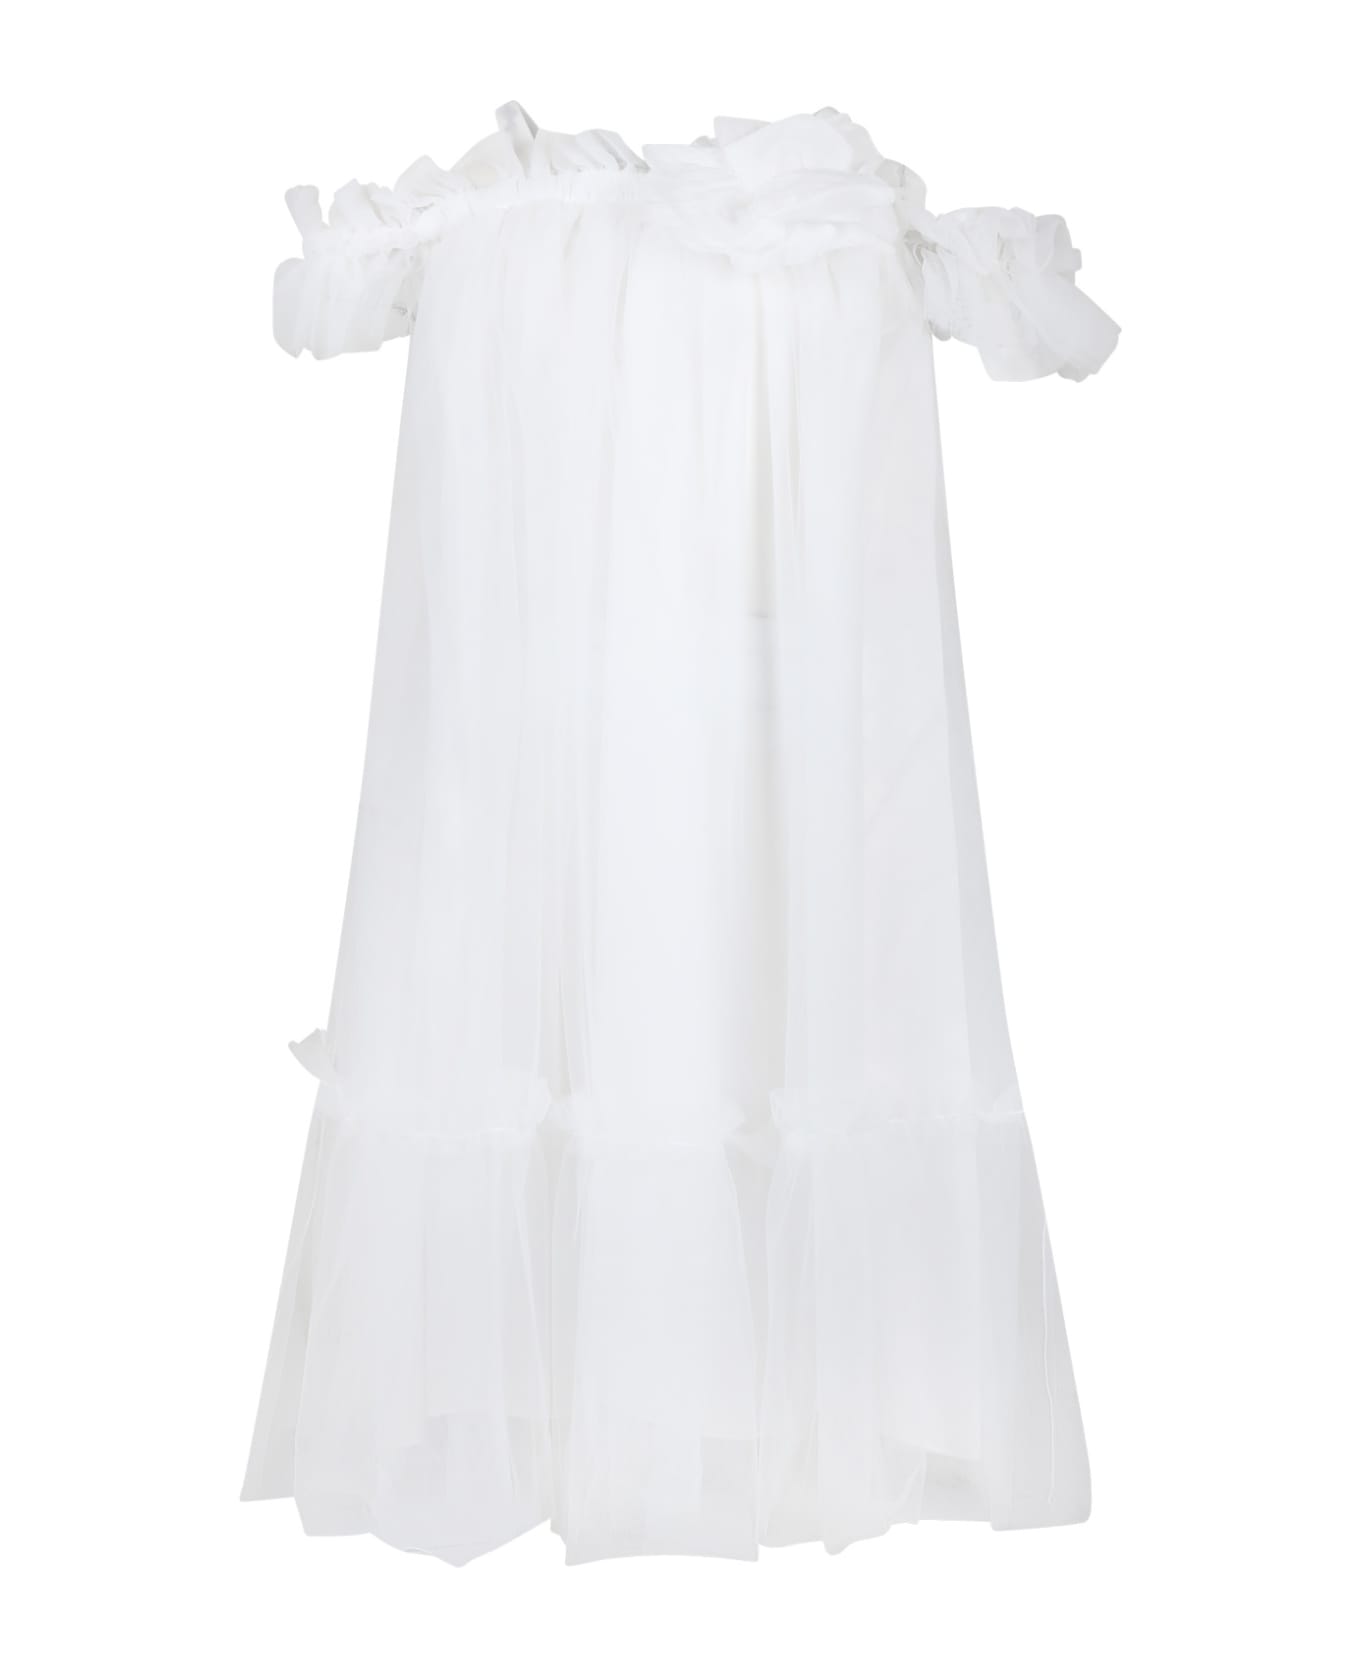 Ermanno Scervino Junior White Dress For Girl With Flower - White